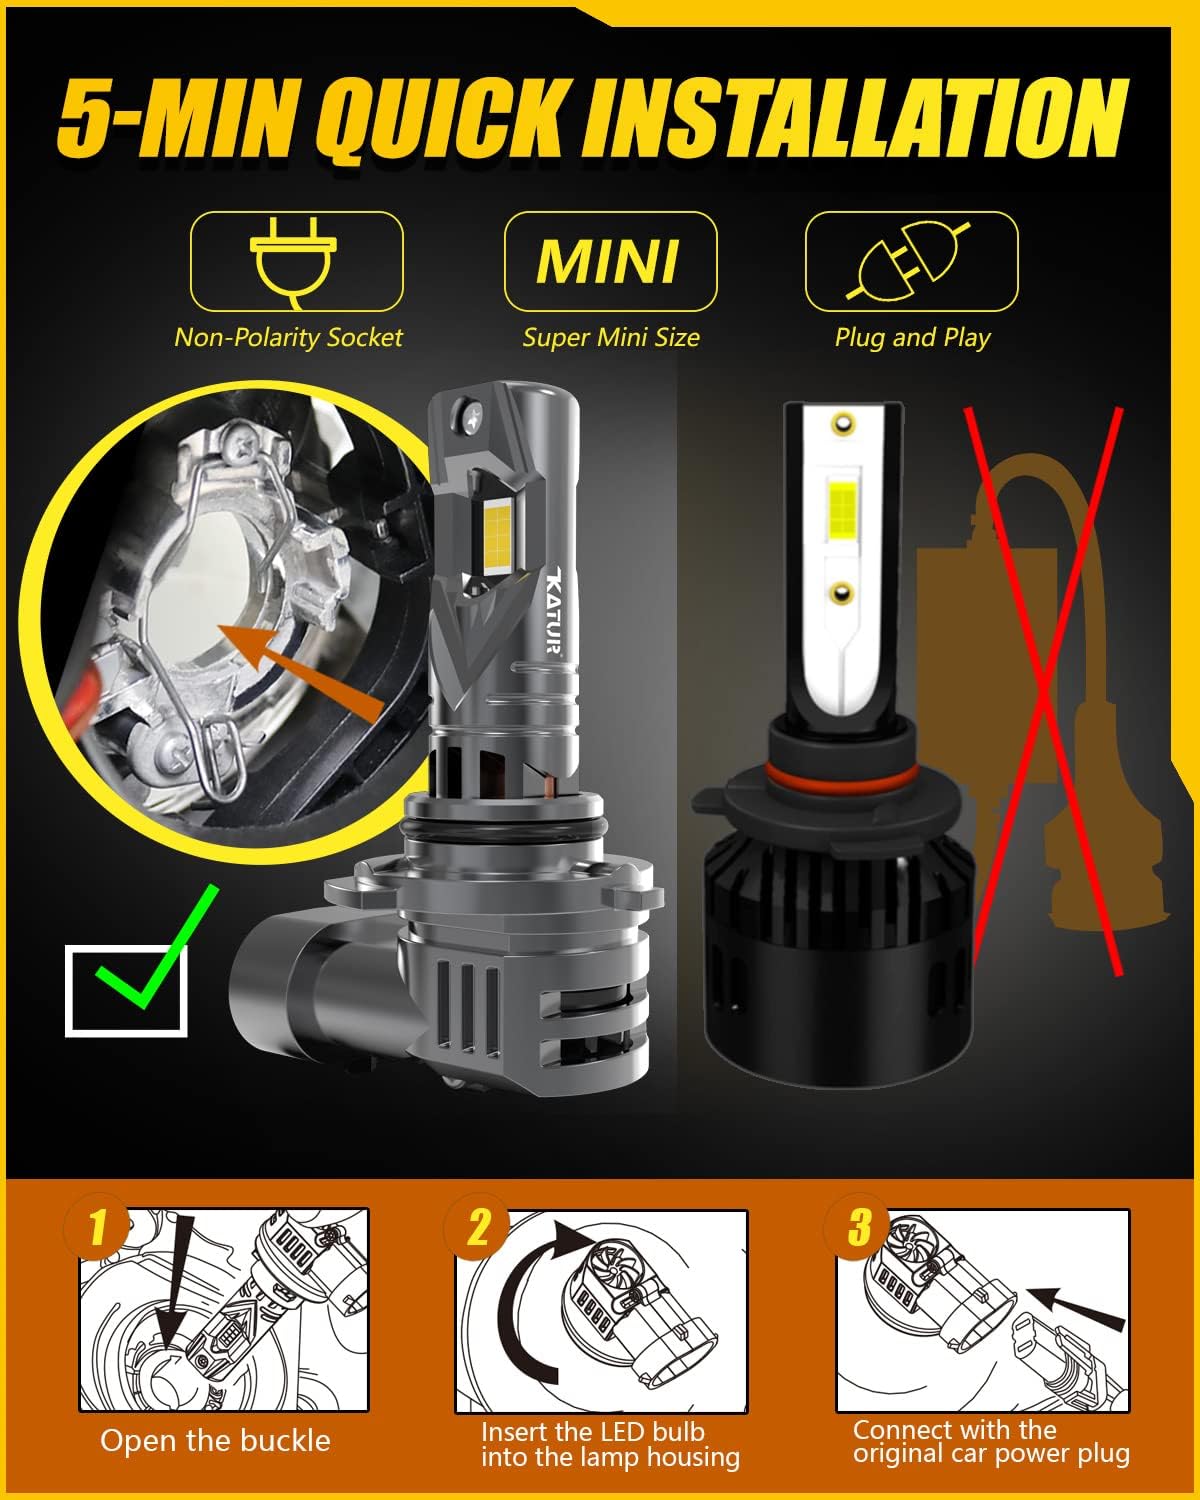 KATUR 9006 LED Headlight Bulbs Xenon White 1:1 Mini Size All-in-One Conversion Kit Plug and Play HB4 LED Fog Light Bulb, Pack of 2